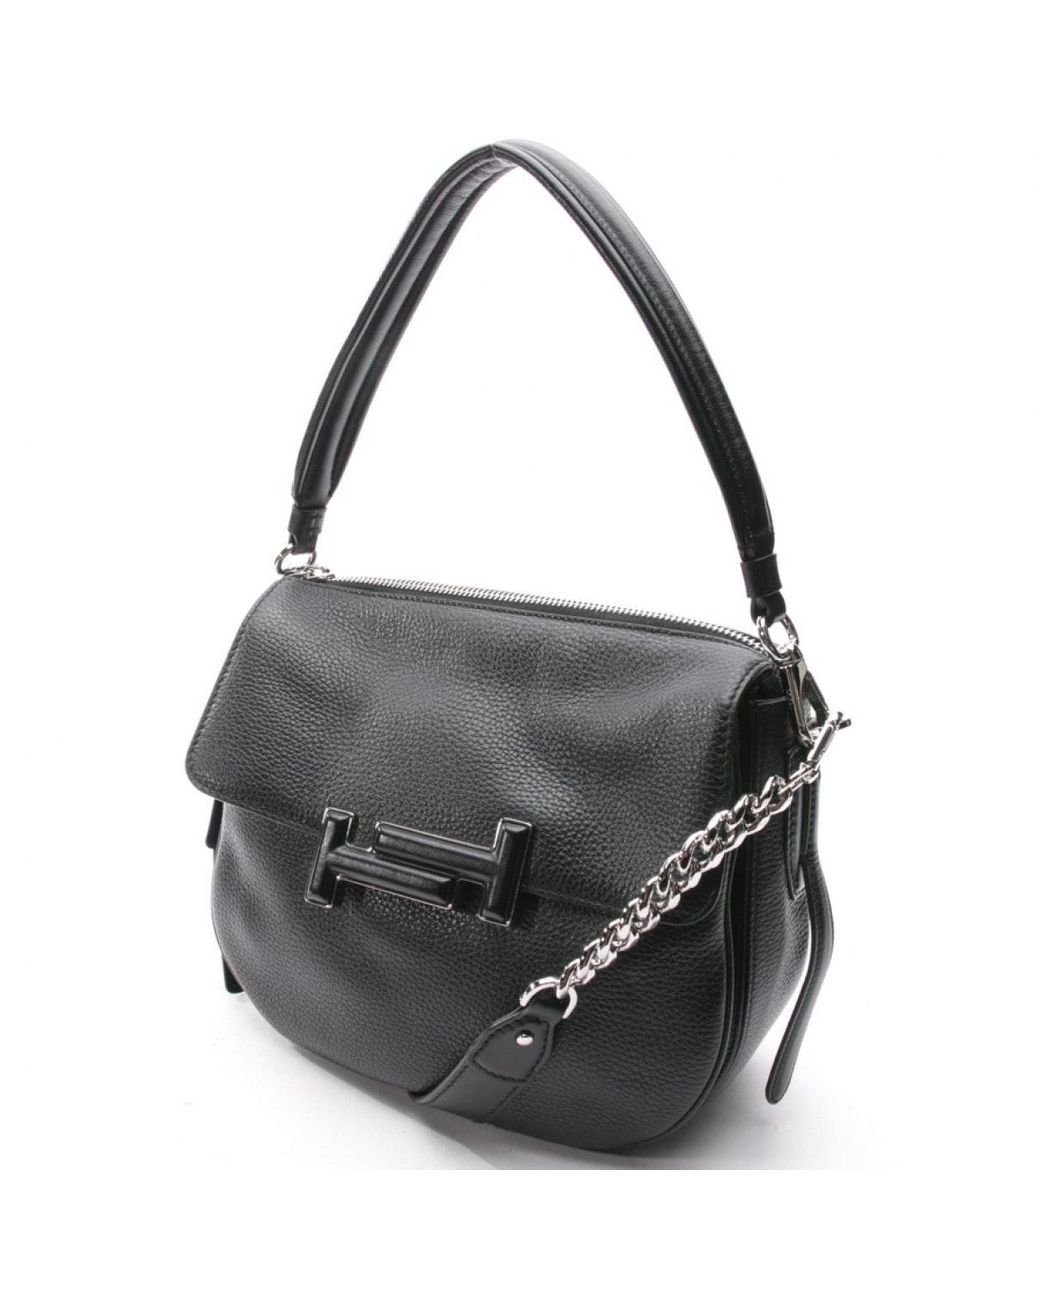 Tod's Leather Handbag in Black - Lyst